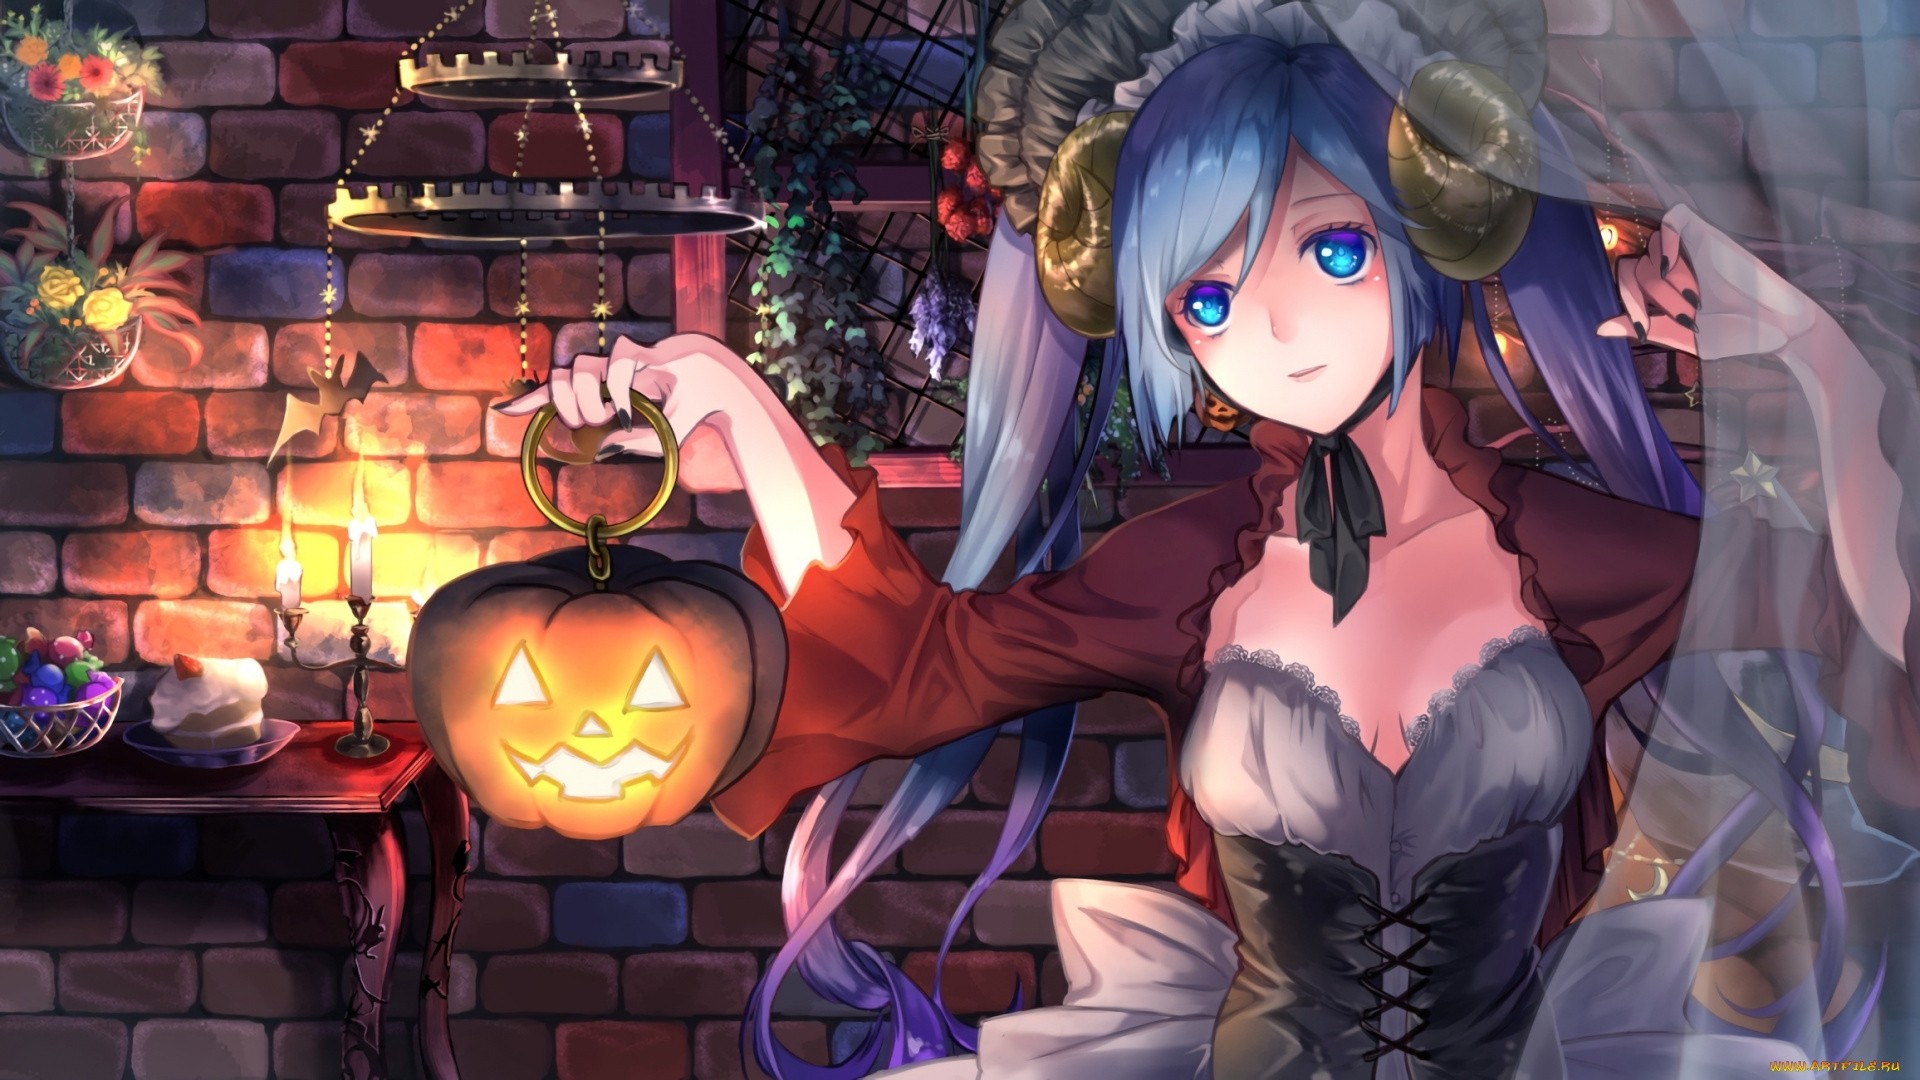 Halloween Anime wallpaper photo hd